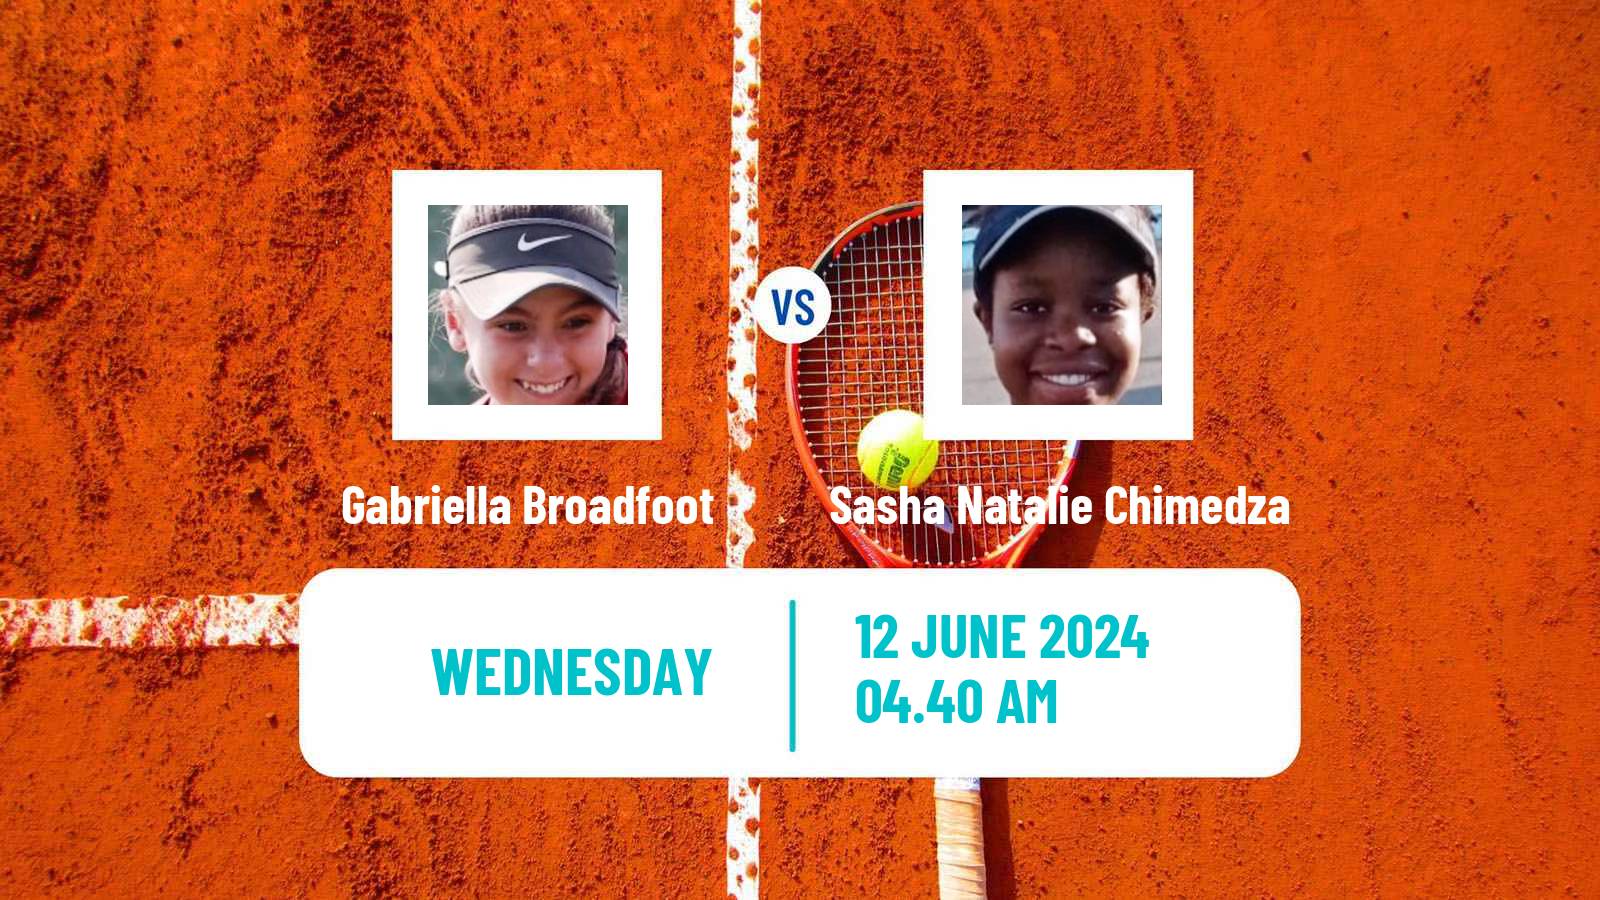 Tennis WTA Billie Jean King Cup Group III Gabriella Broadfoot - Sasha Natalie Chimedza